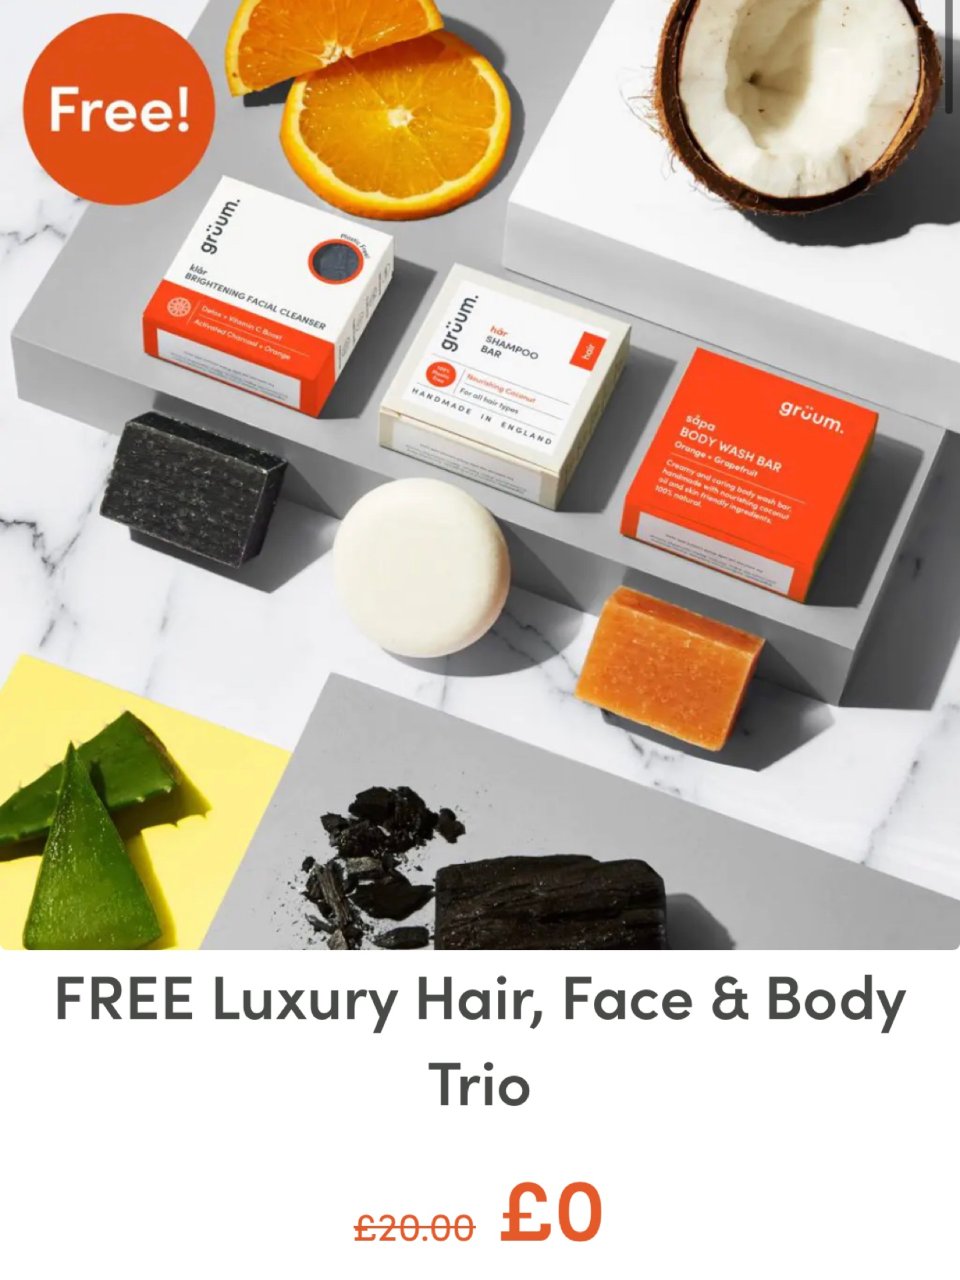 FREE Luxury Hair, Face & Body Trio - grüum